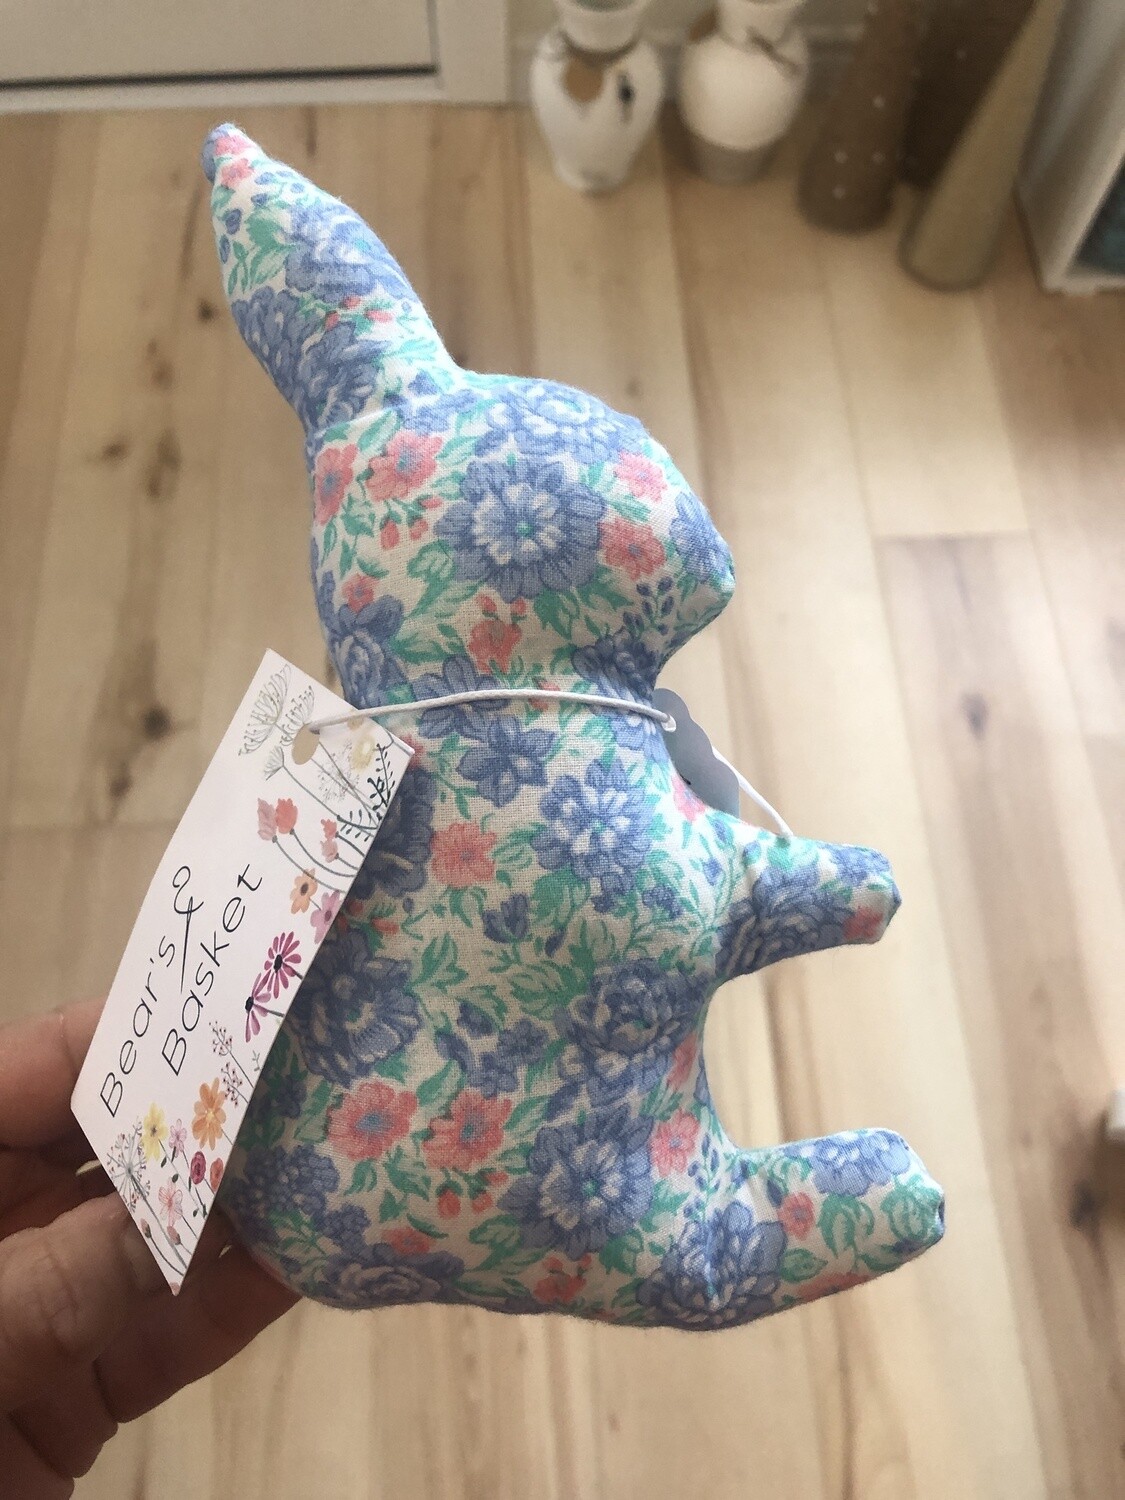 Stuffed Bunny Toy